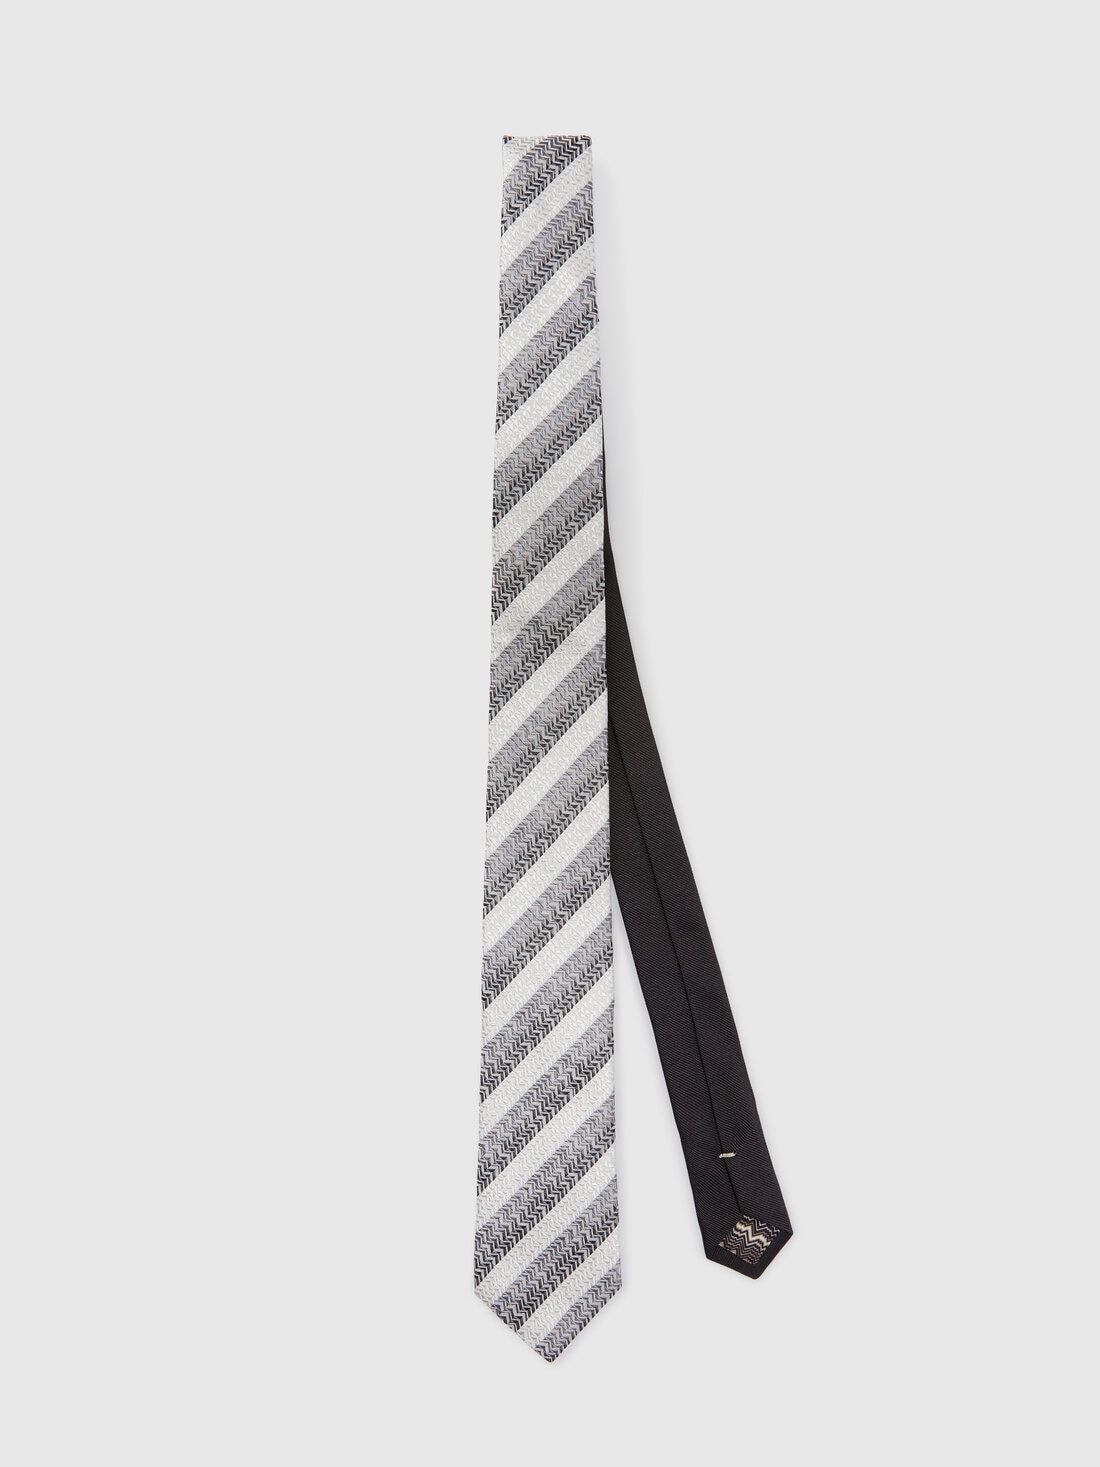 Silk tie with chevron pattern, Multicoloured  - 8053147141909 - 0